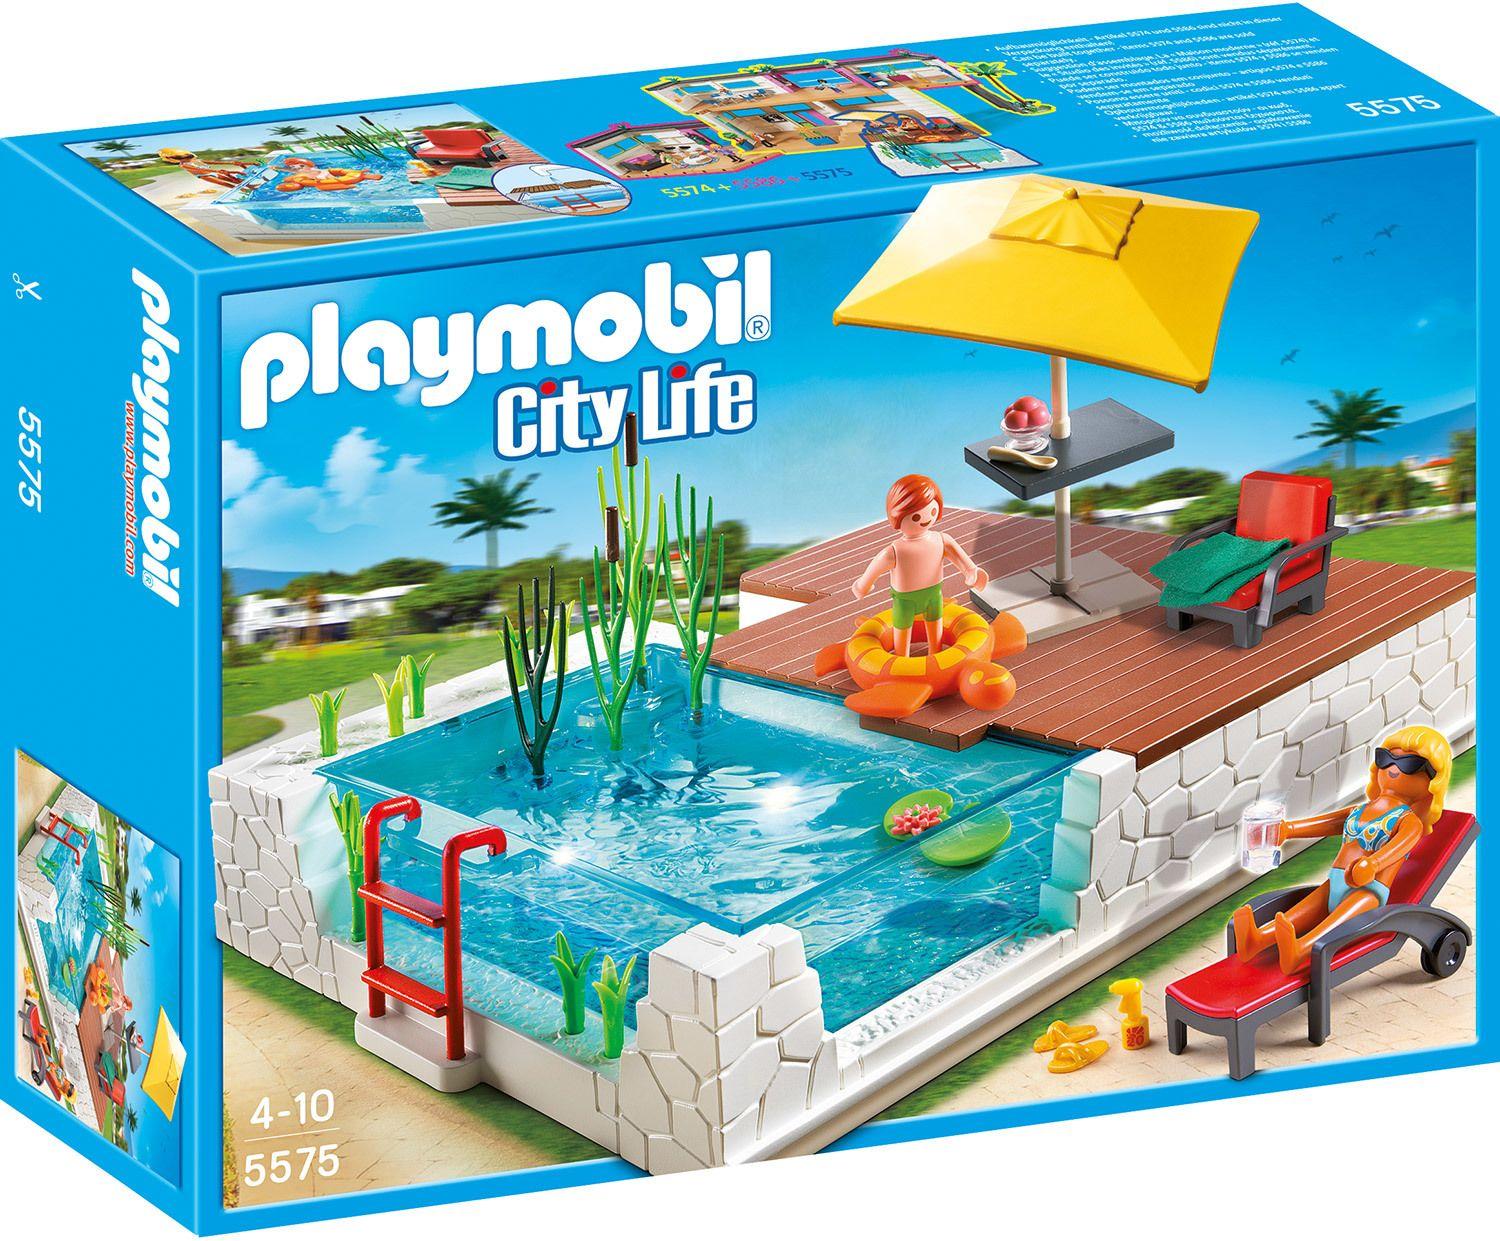 Playmobil PLAYMOBIL City Life 5574 Maison Moderne